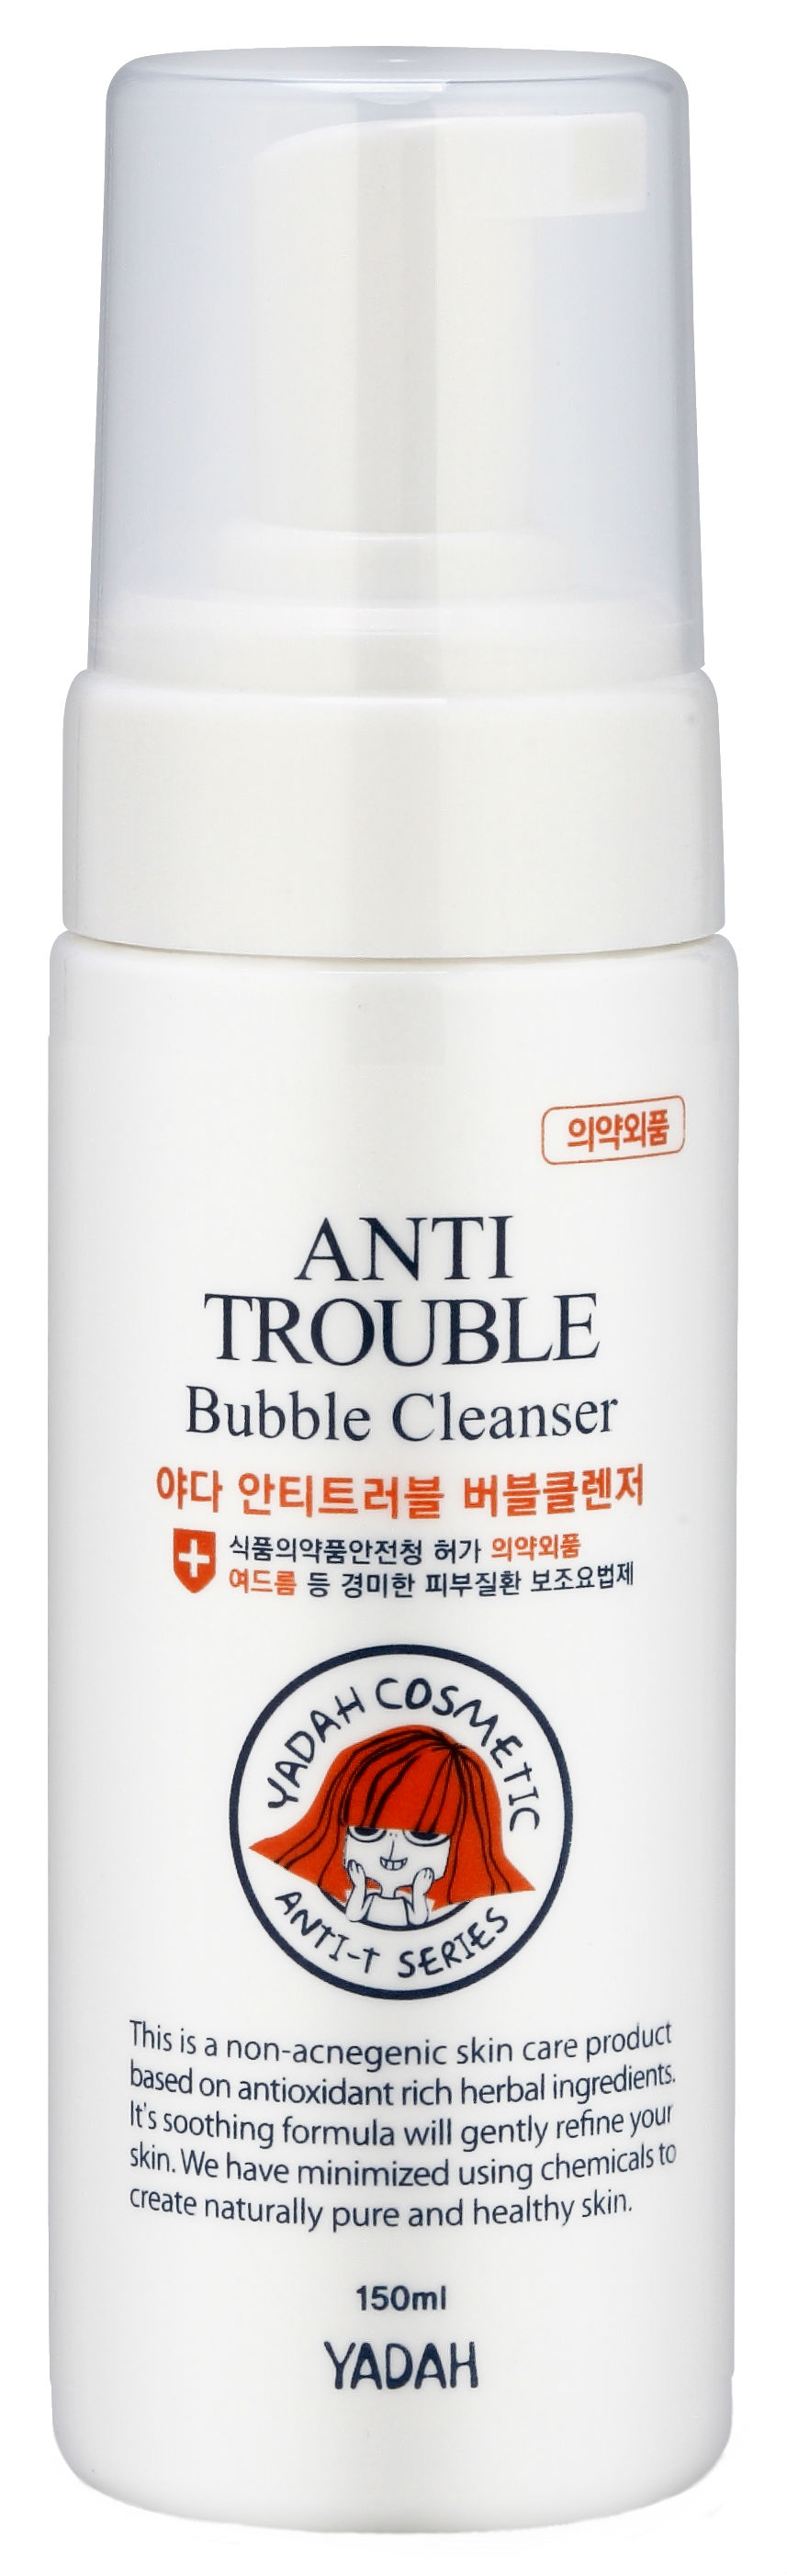 Пенка для умывания Yadah Anti Trouble Bubble Cleanser 150 мл пенка для умывания yadah anti trouble bubble cleanser 150 мл